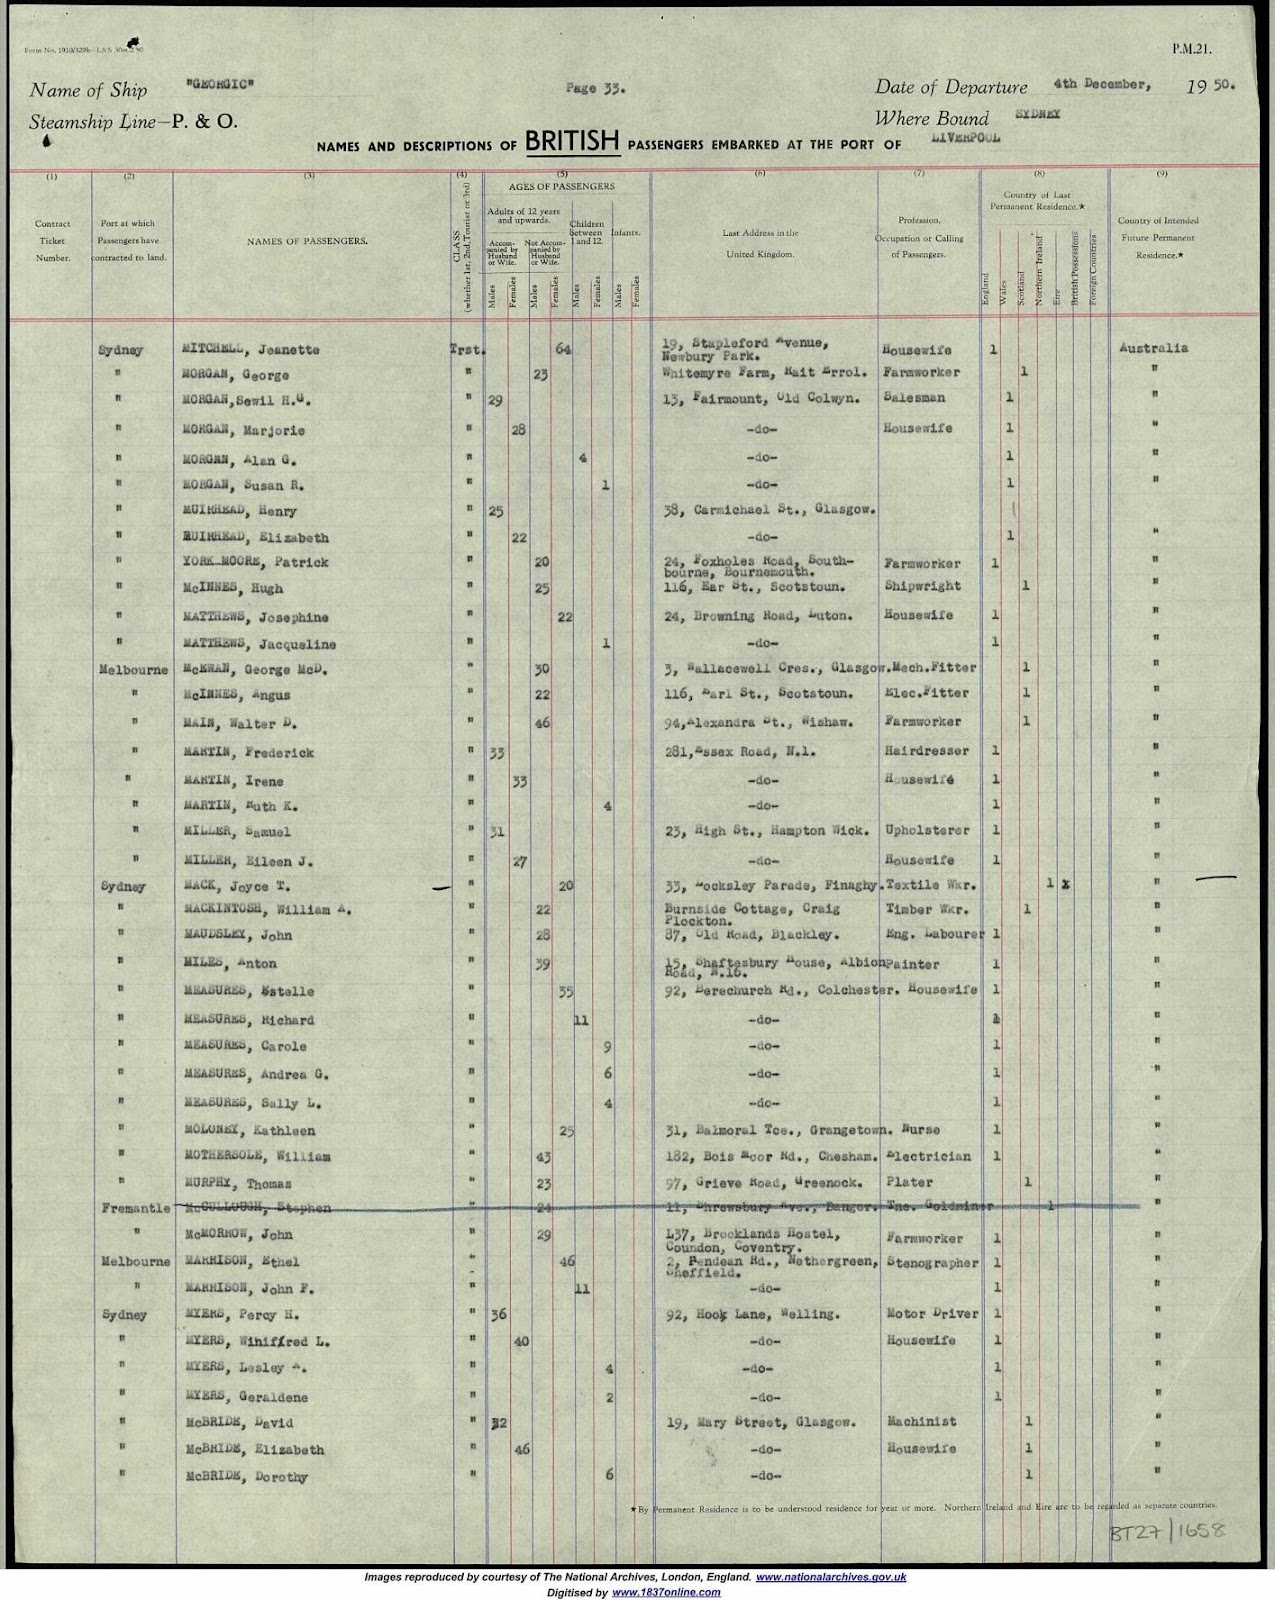 C:\Users\Main user\Documents\Ancestry\Dadaji\Anton Ships\Anton Miles Passage to Australia 1950 Original.jpg